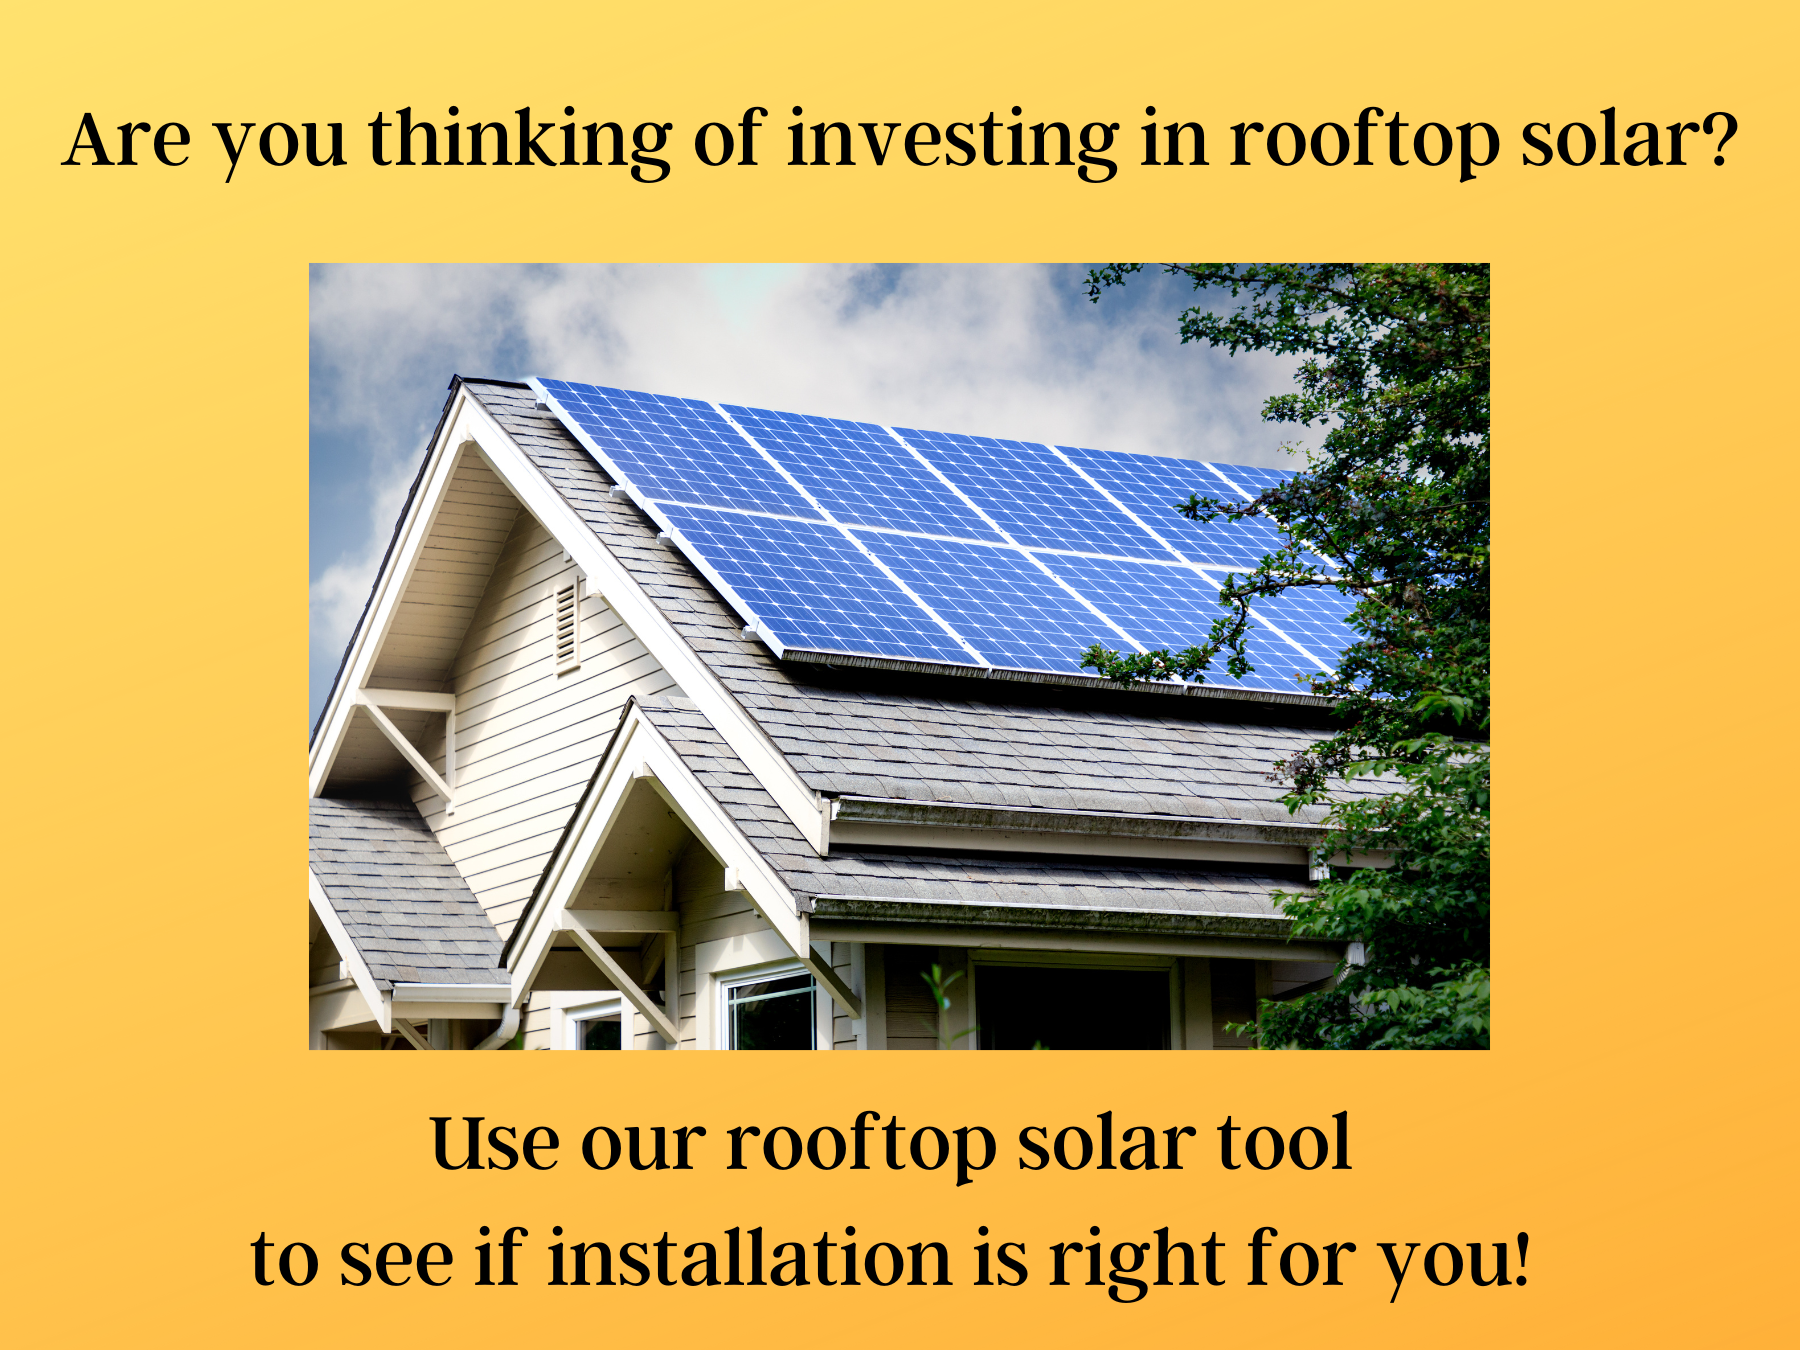 Rooftop Solar Tool